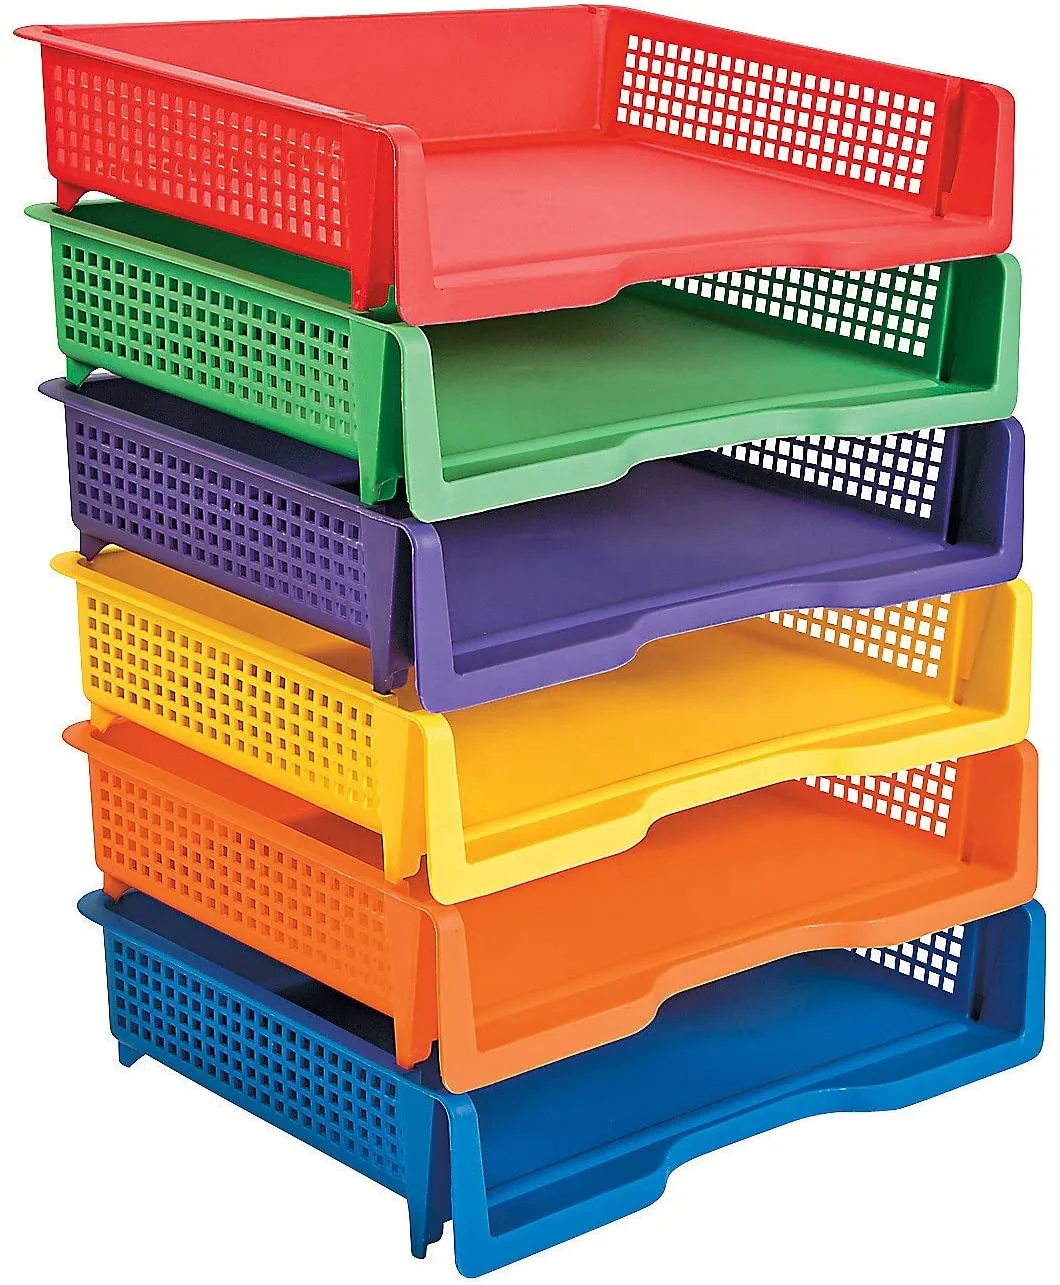 Hot sale colorful plastic desk organizer document tray